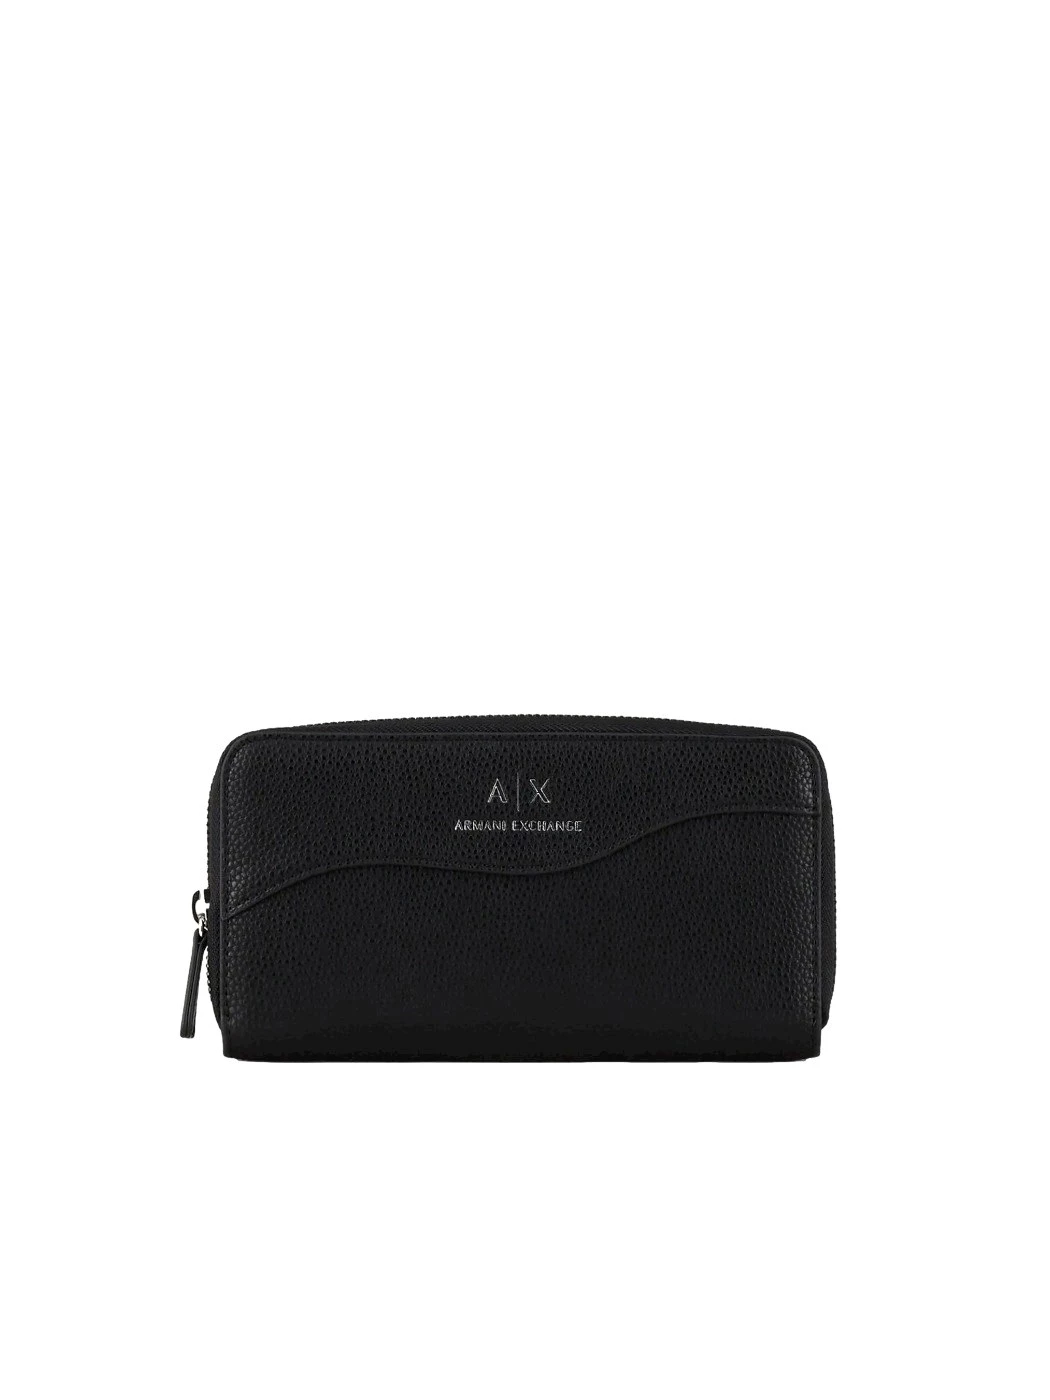 Zip around wallet with Armani Exchange shaped stitching